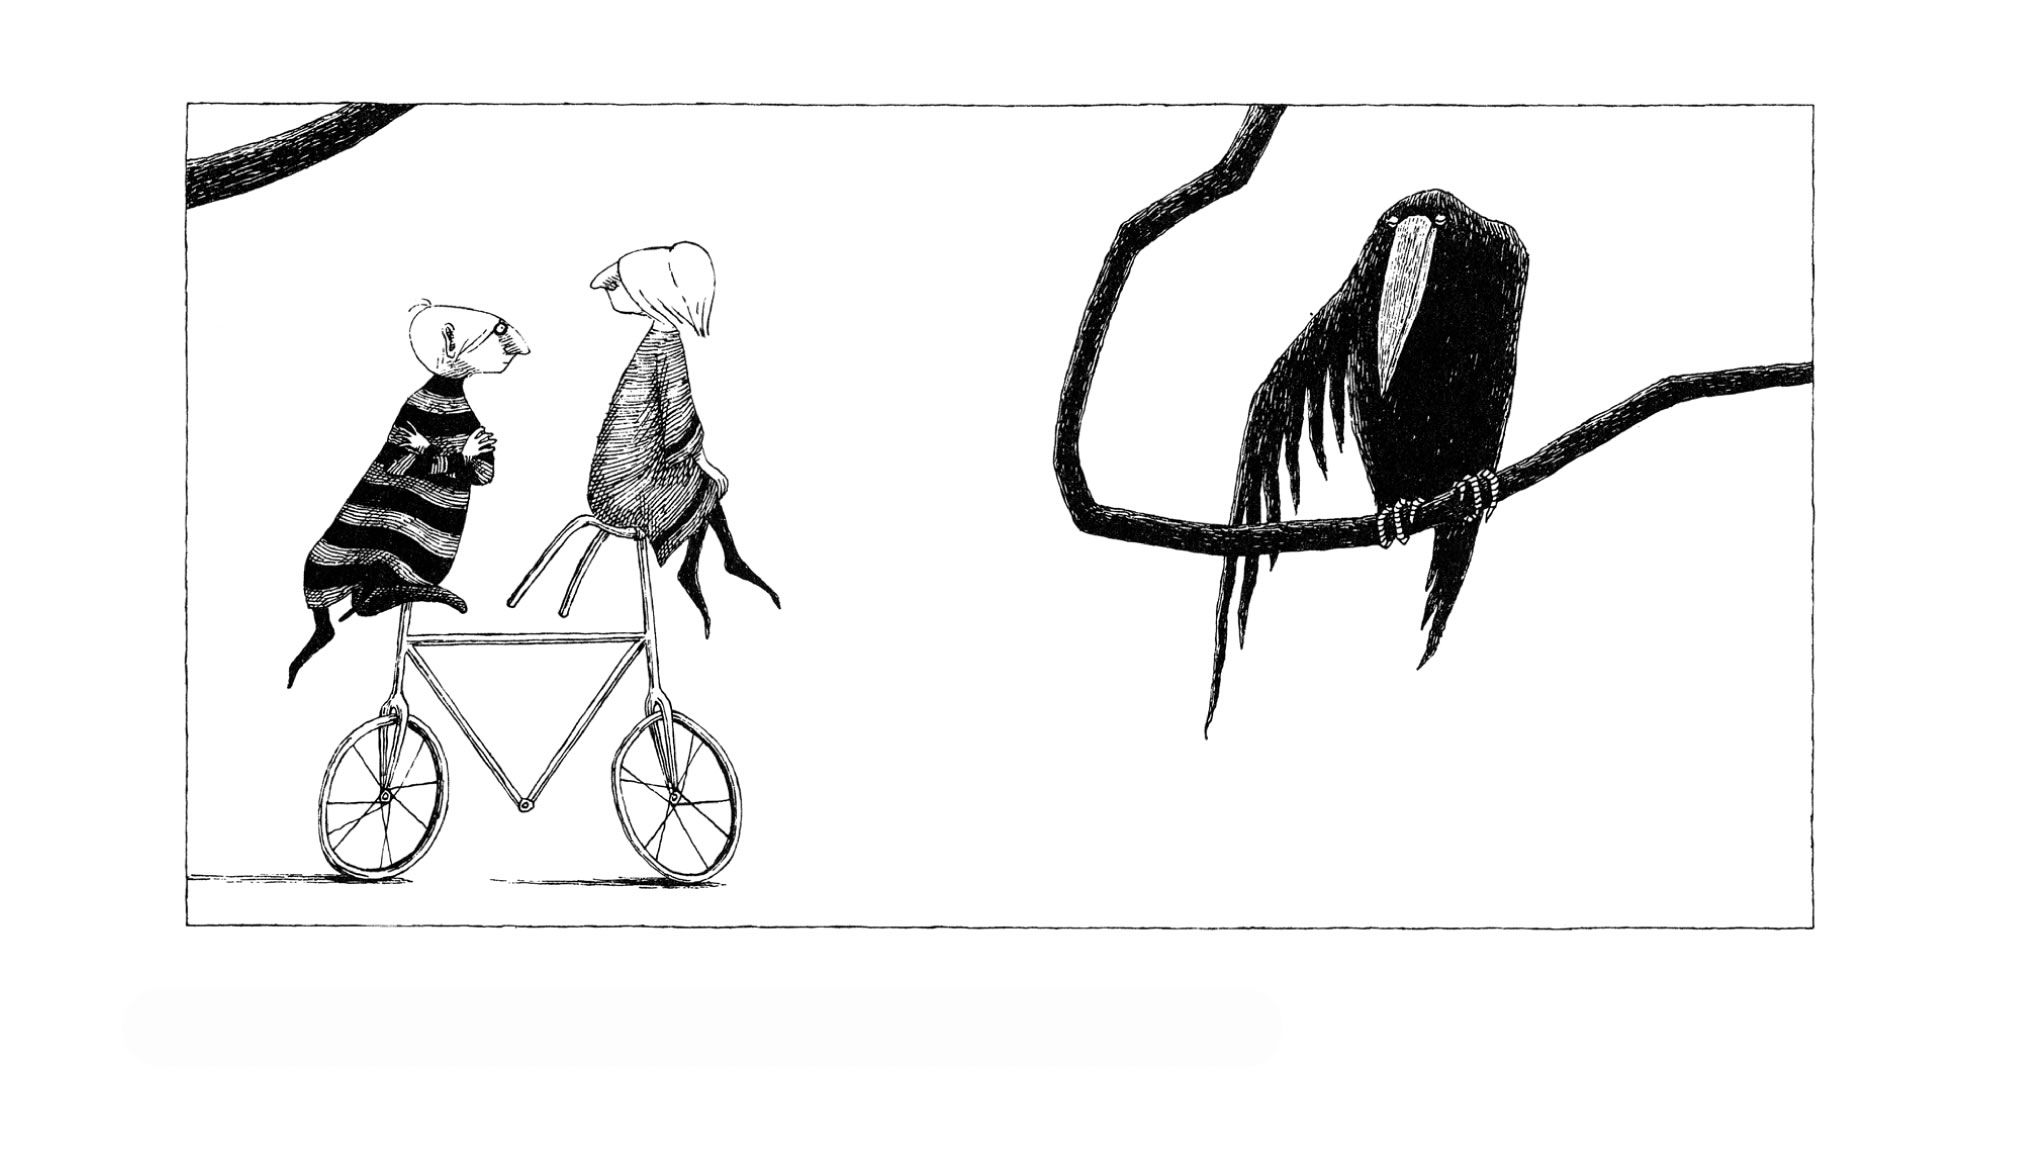 A Bicicleta Epipletica